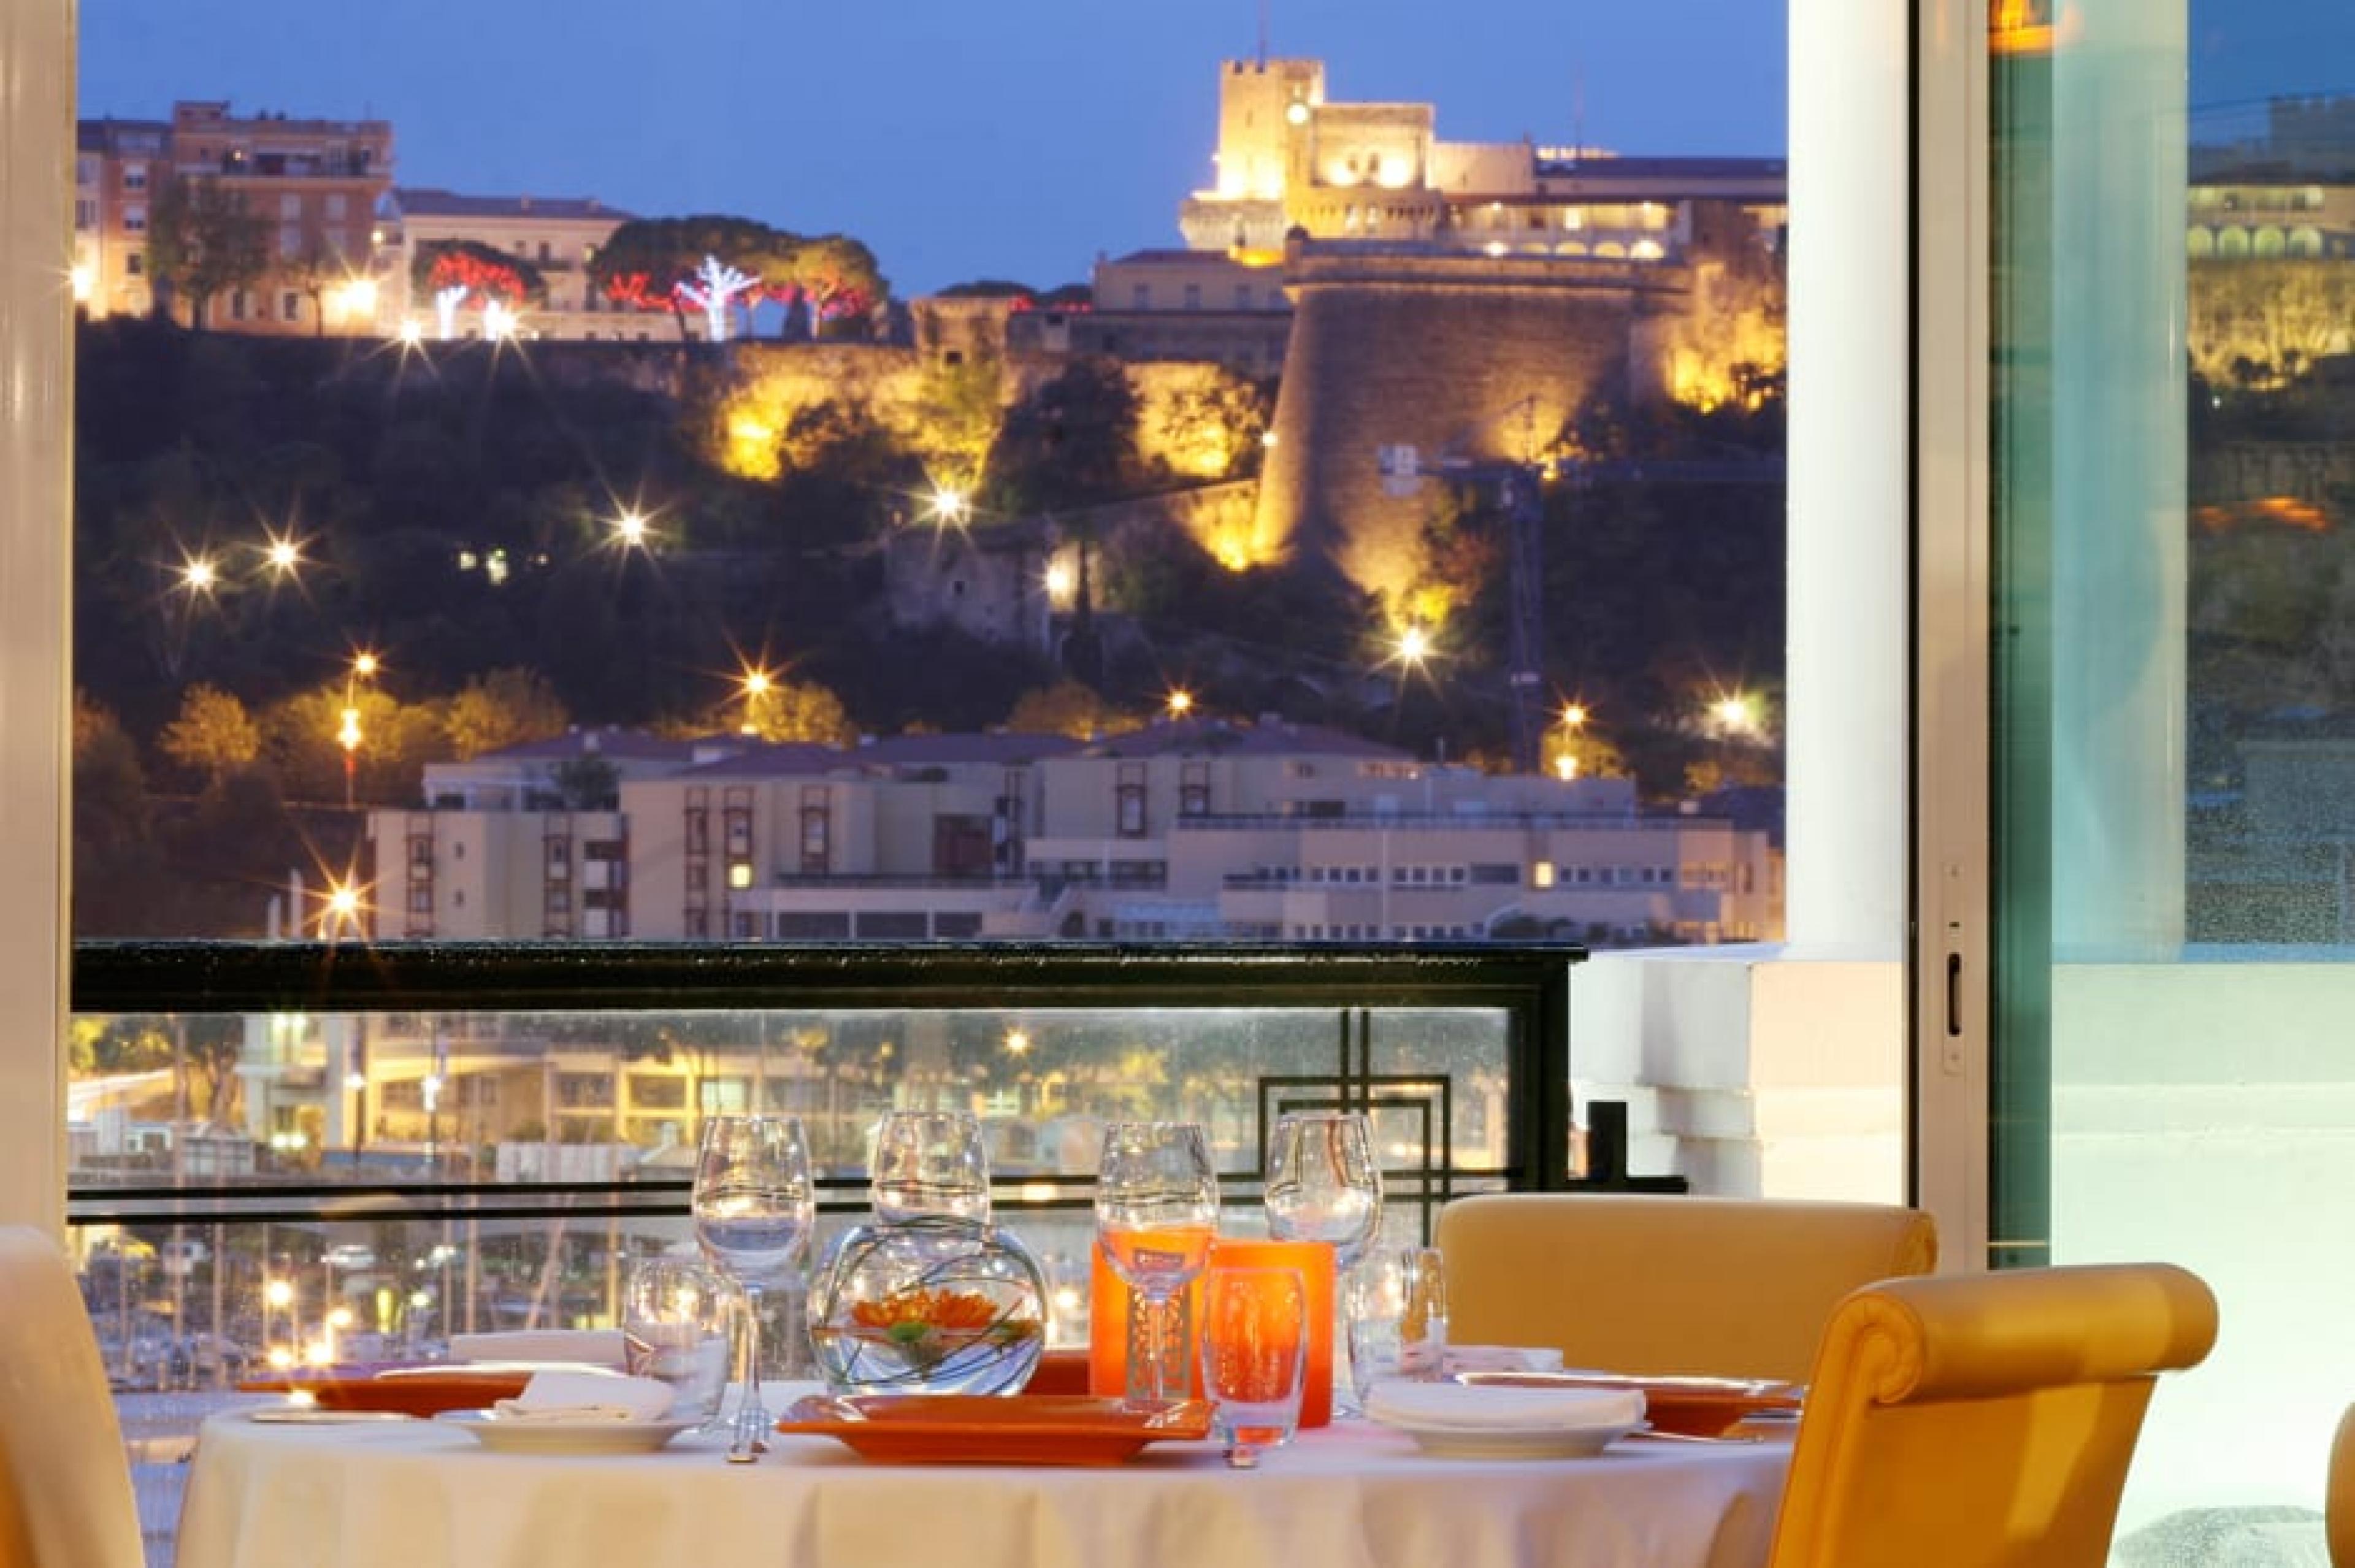 Dinning Area at Port Palace, Monaco